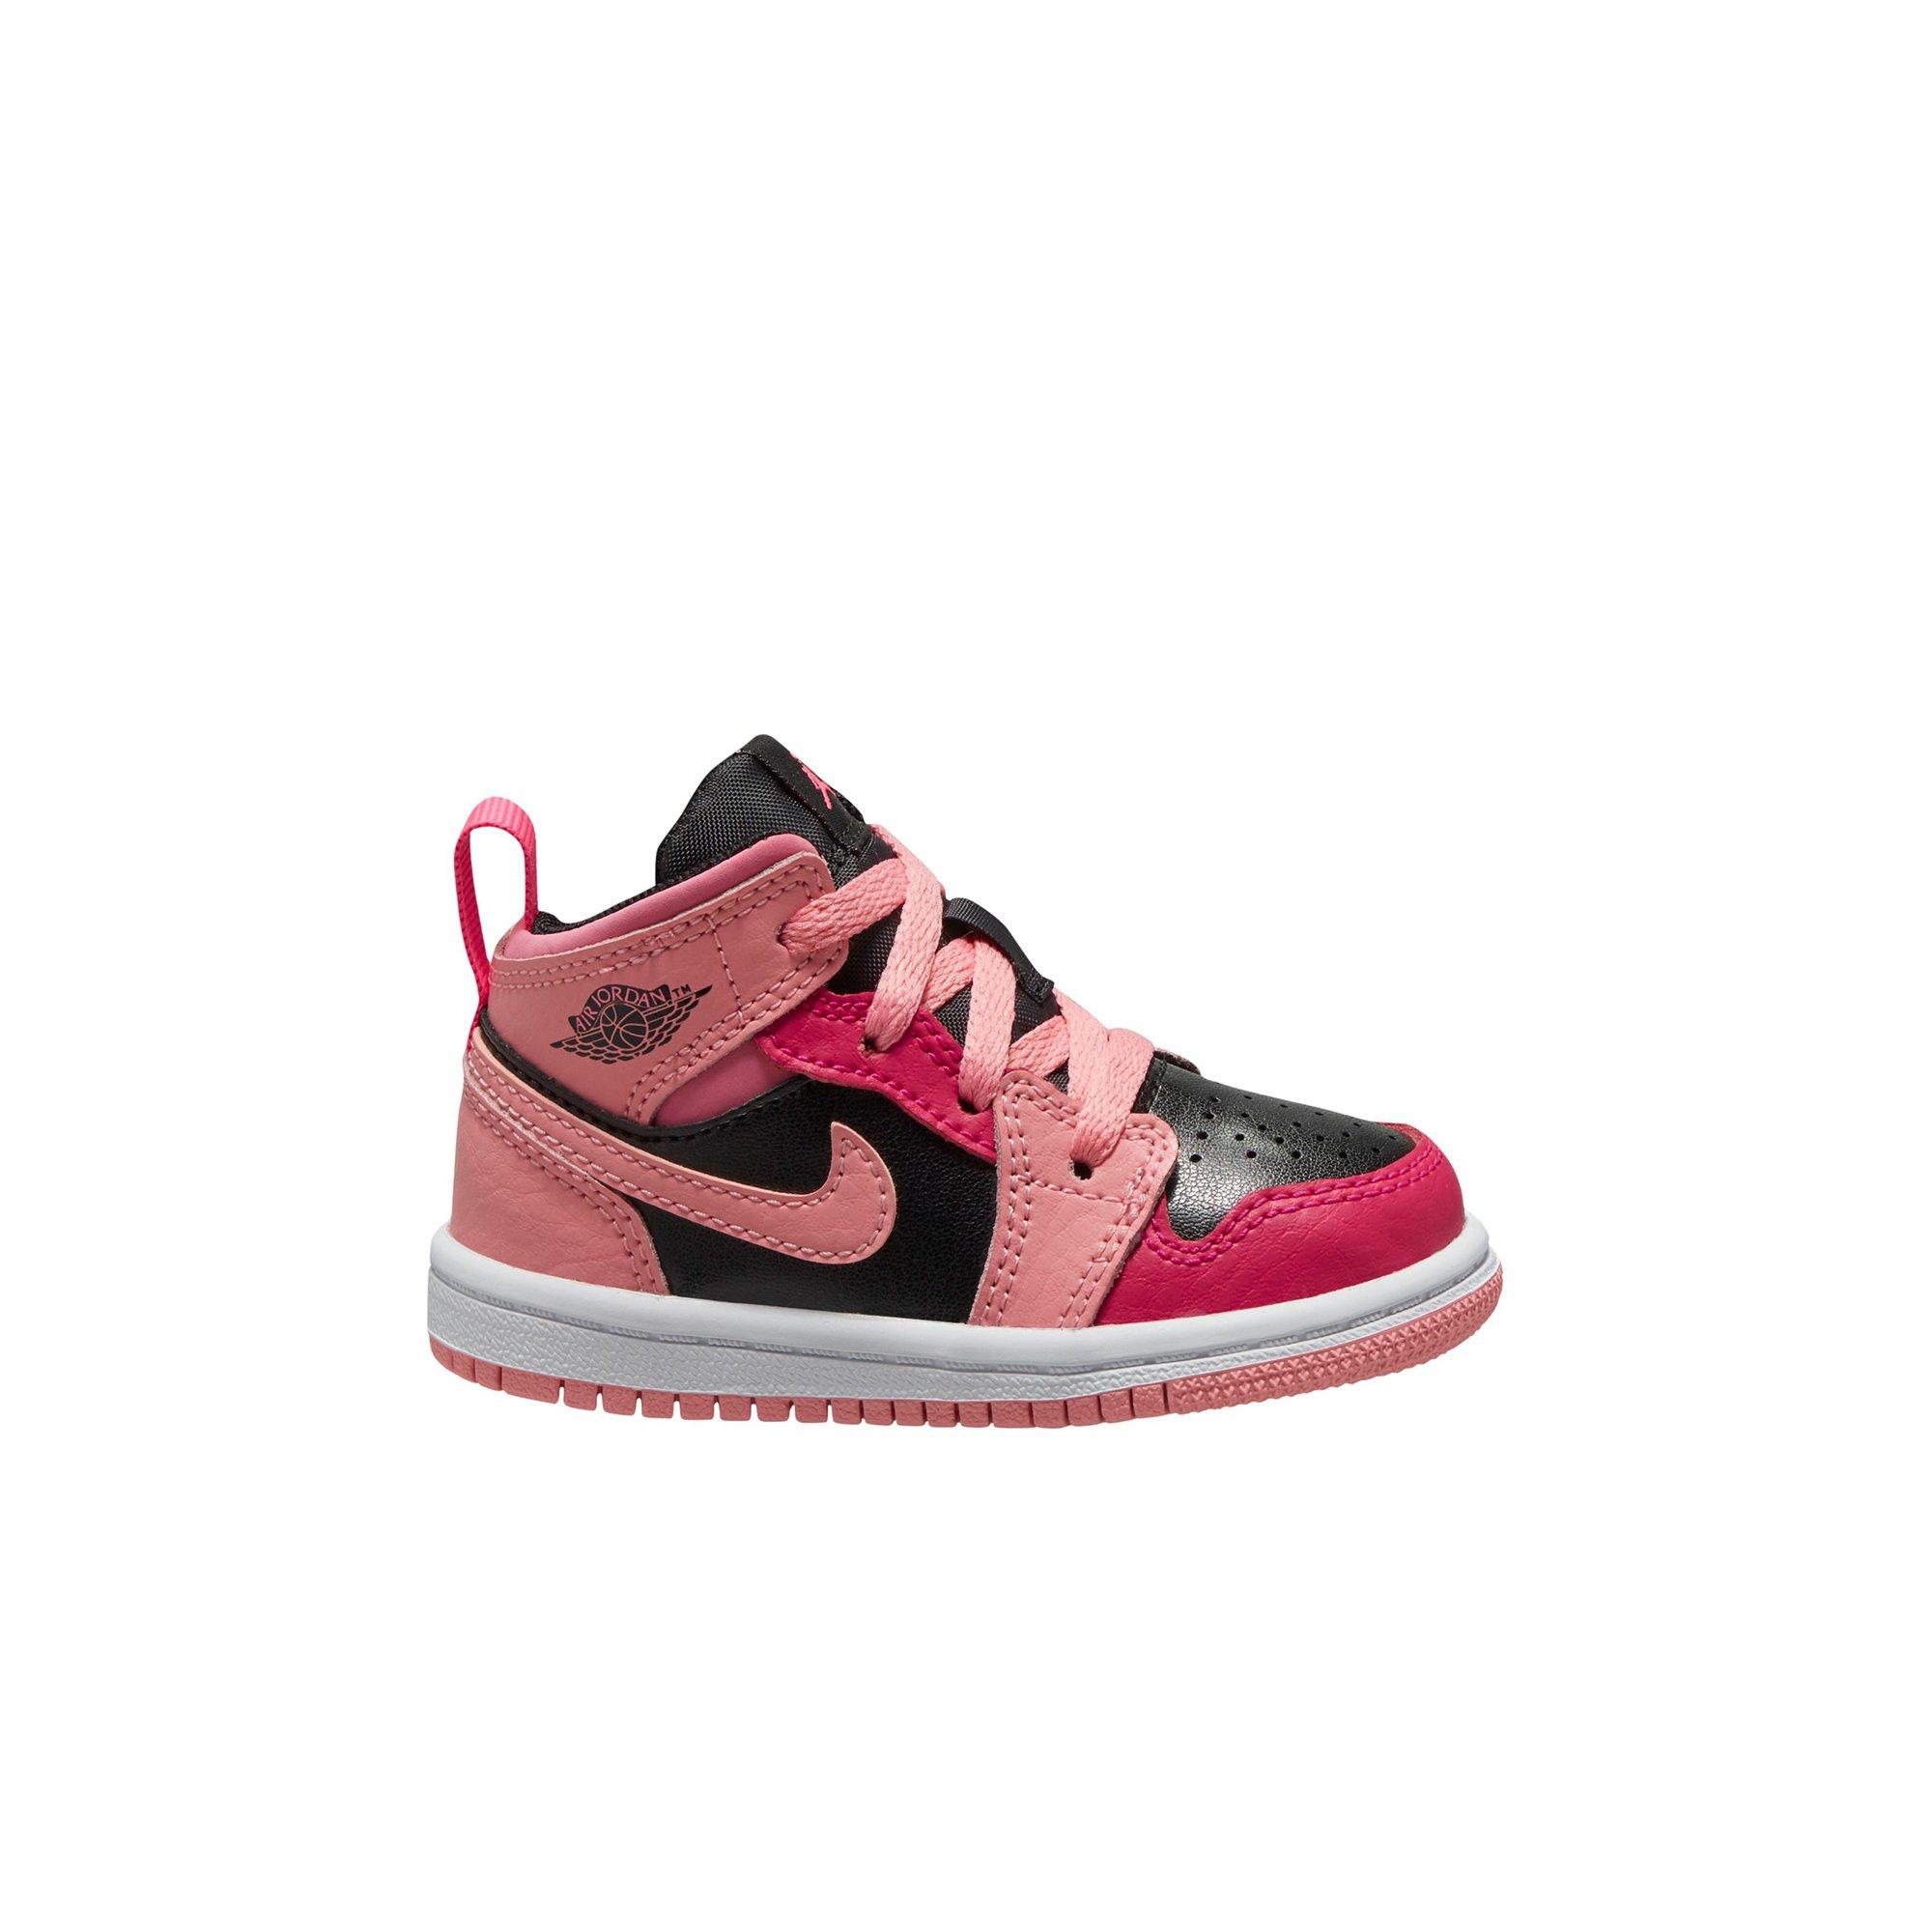 girl jordan shoes pink and black